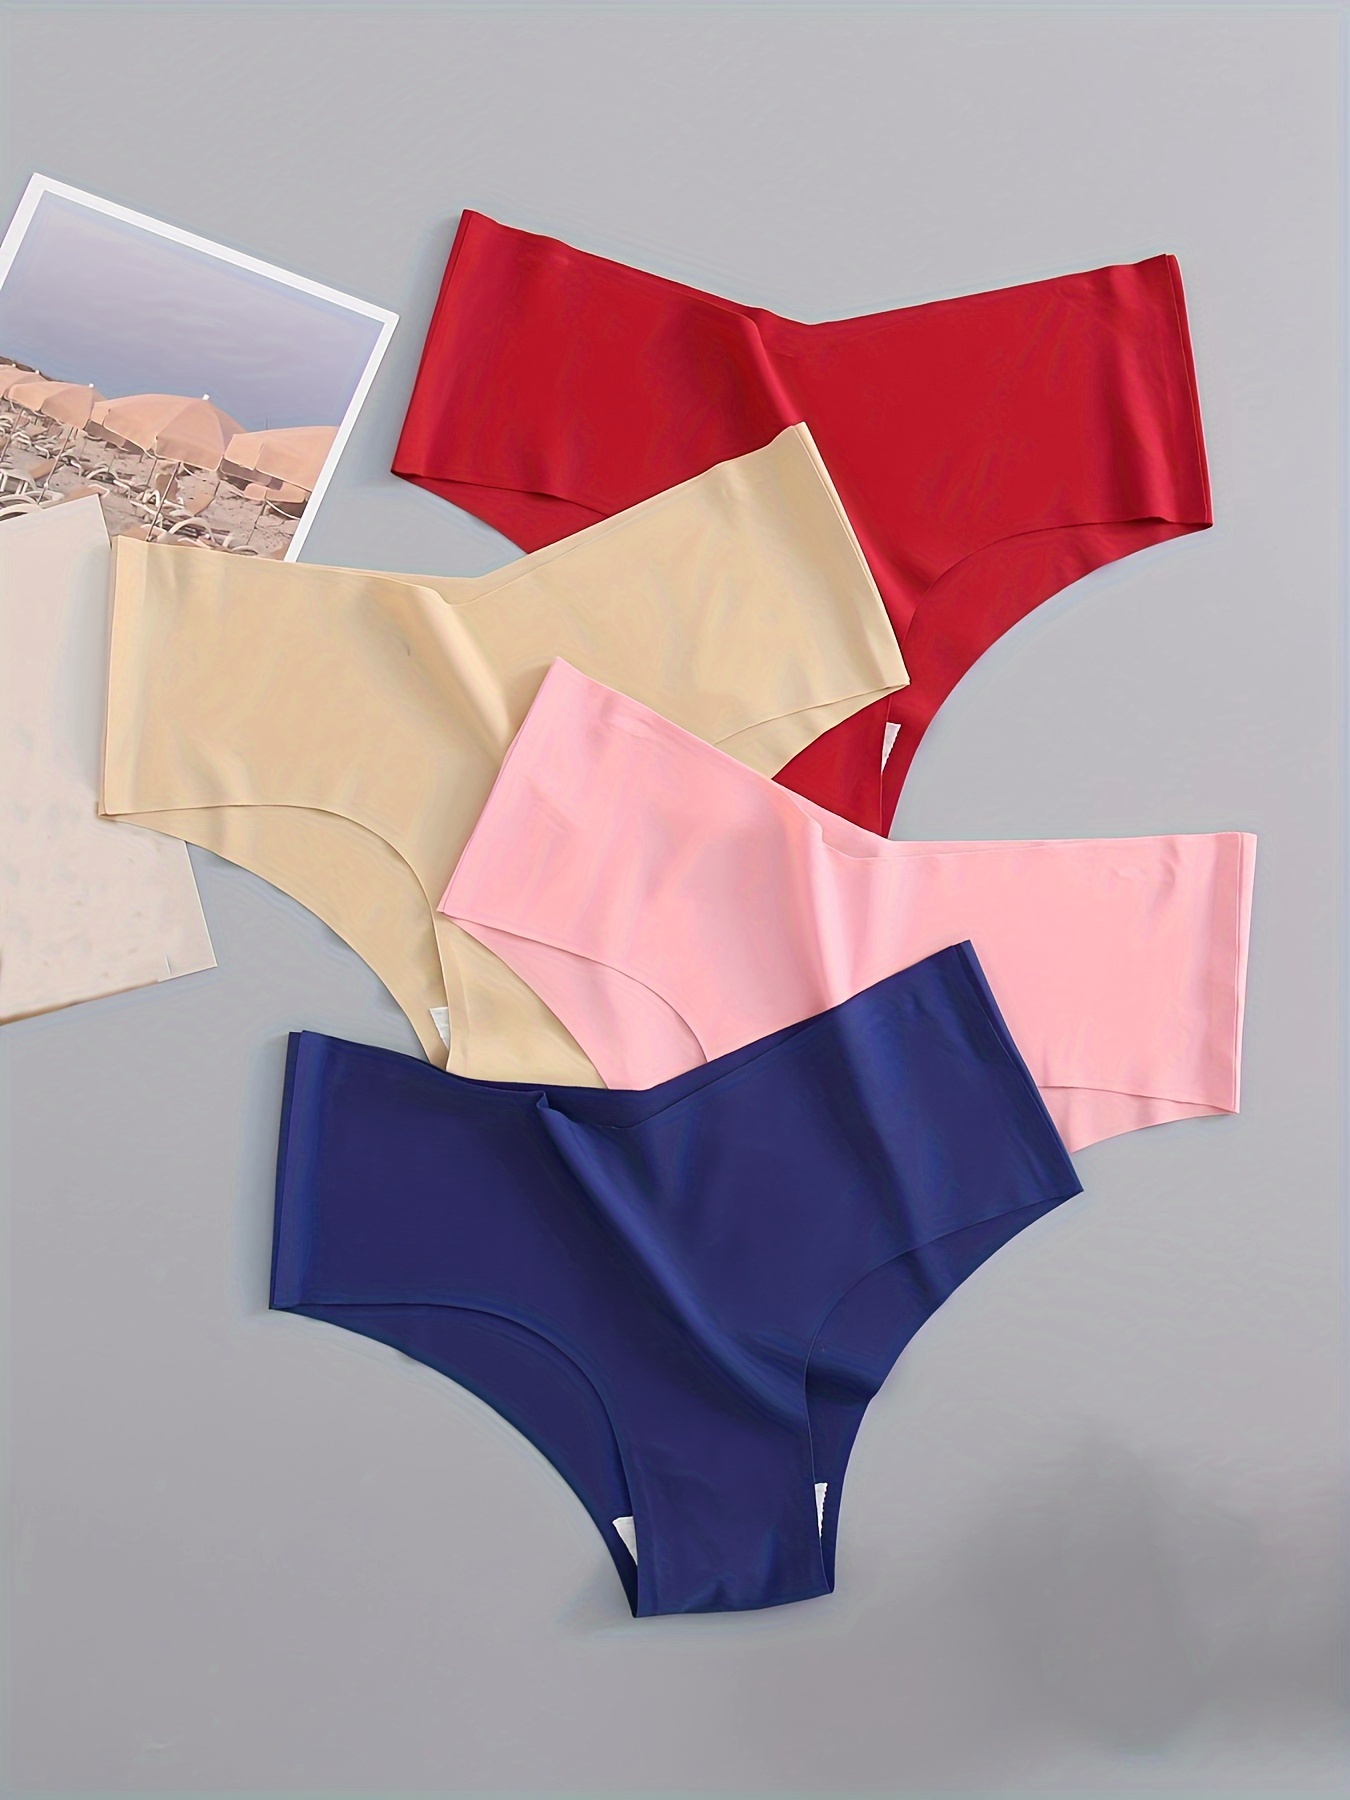 Women's Seamless Underwear: Women's Seamless Panties